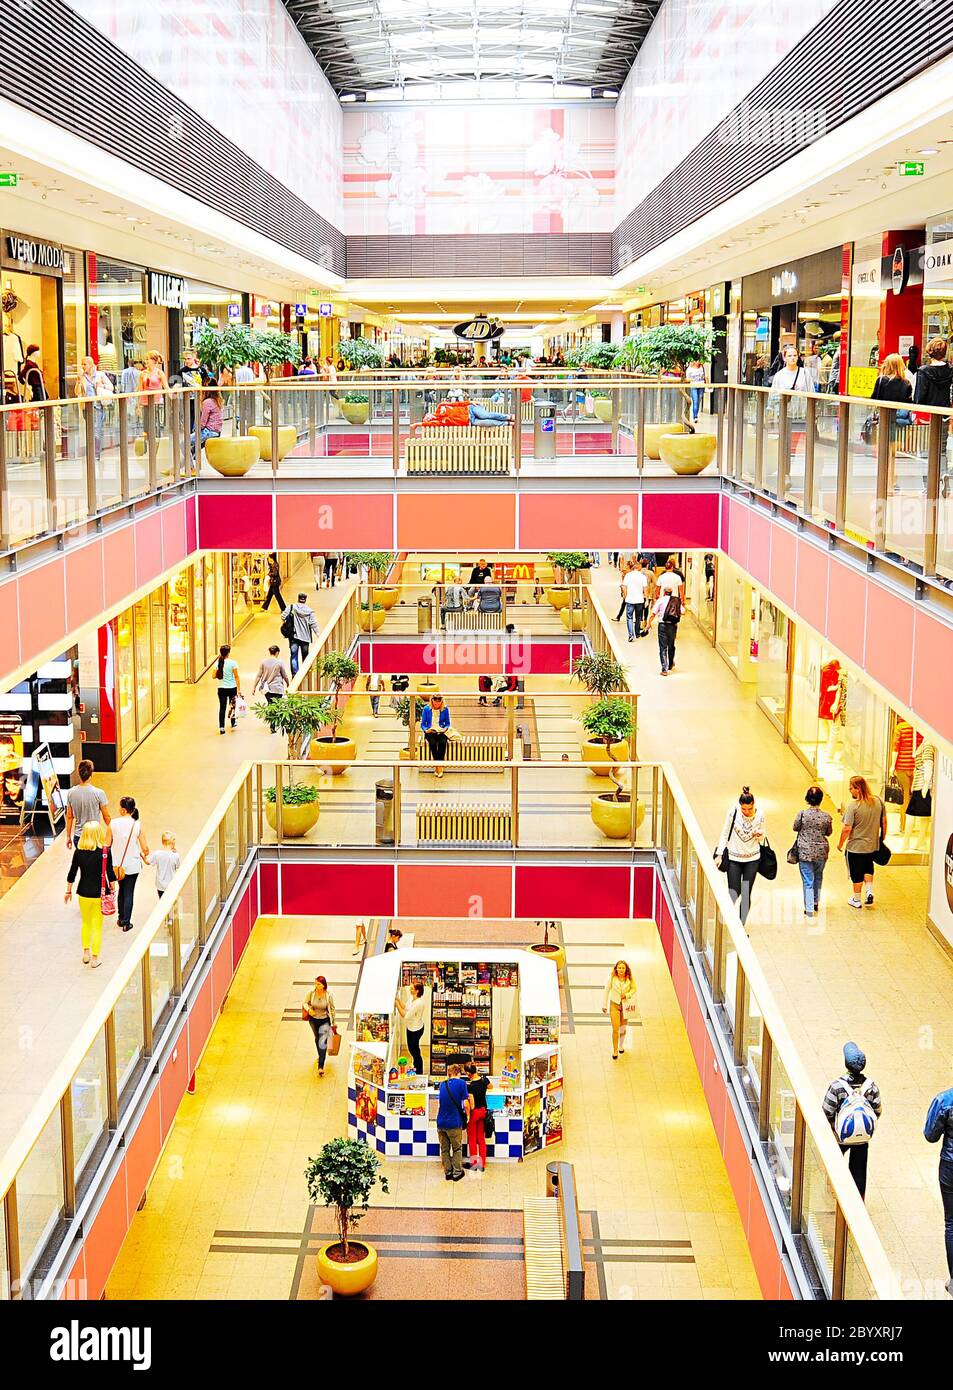 Galeria Krakowska shopping mall Stock Photo - Alamy